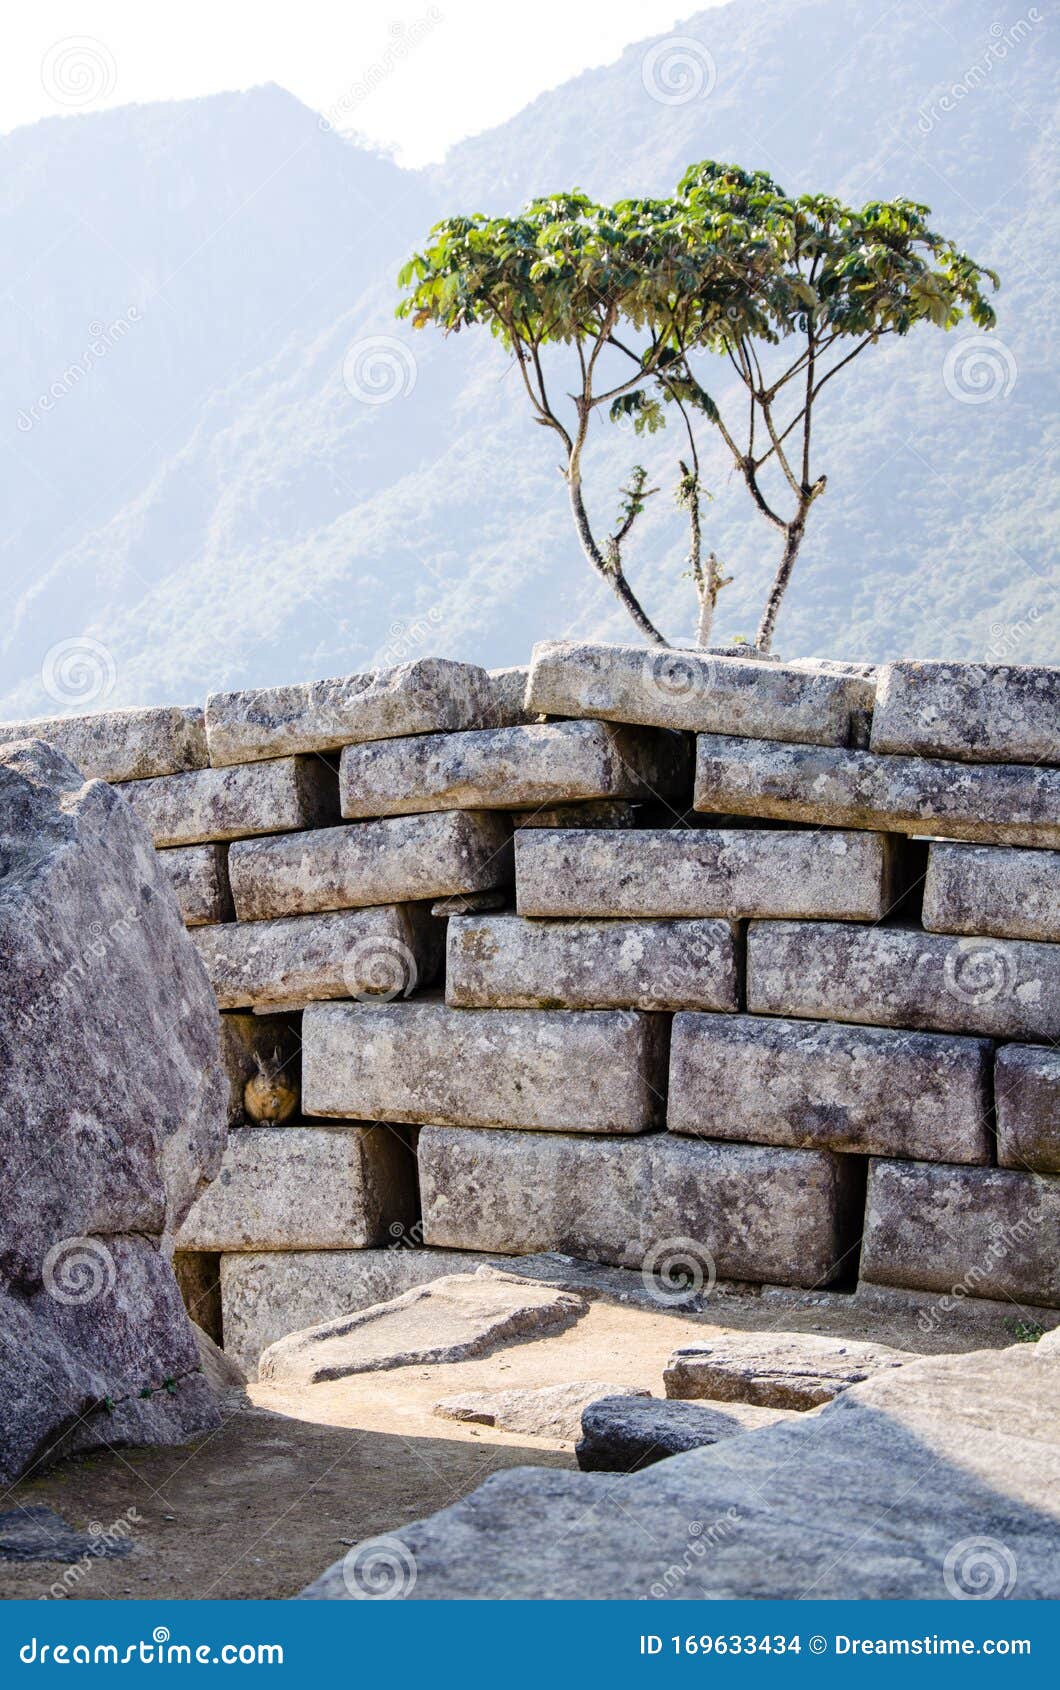 An Incan Wall At City Macchu Picchu Stock Photo Image Of Picchu